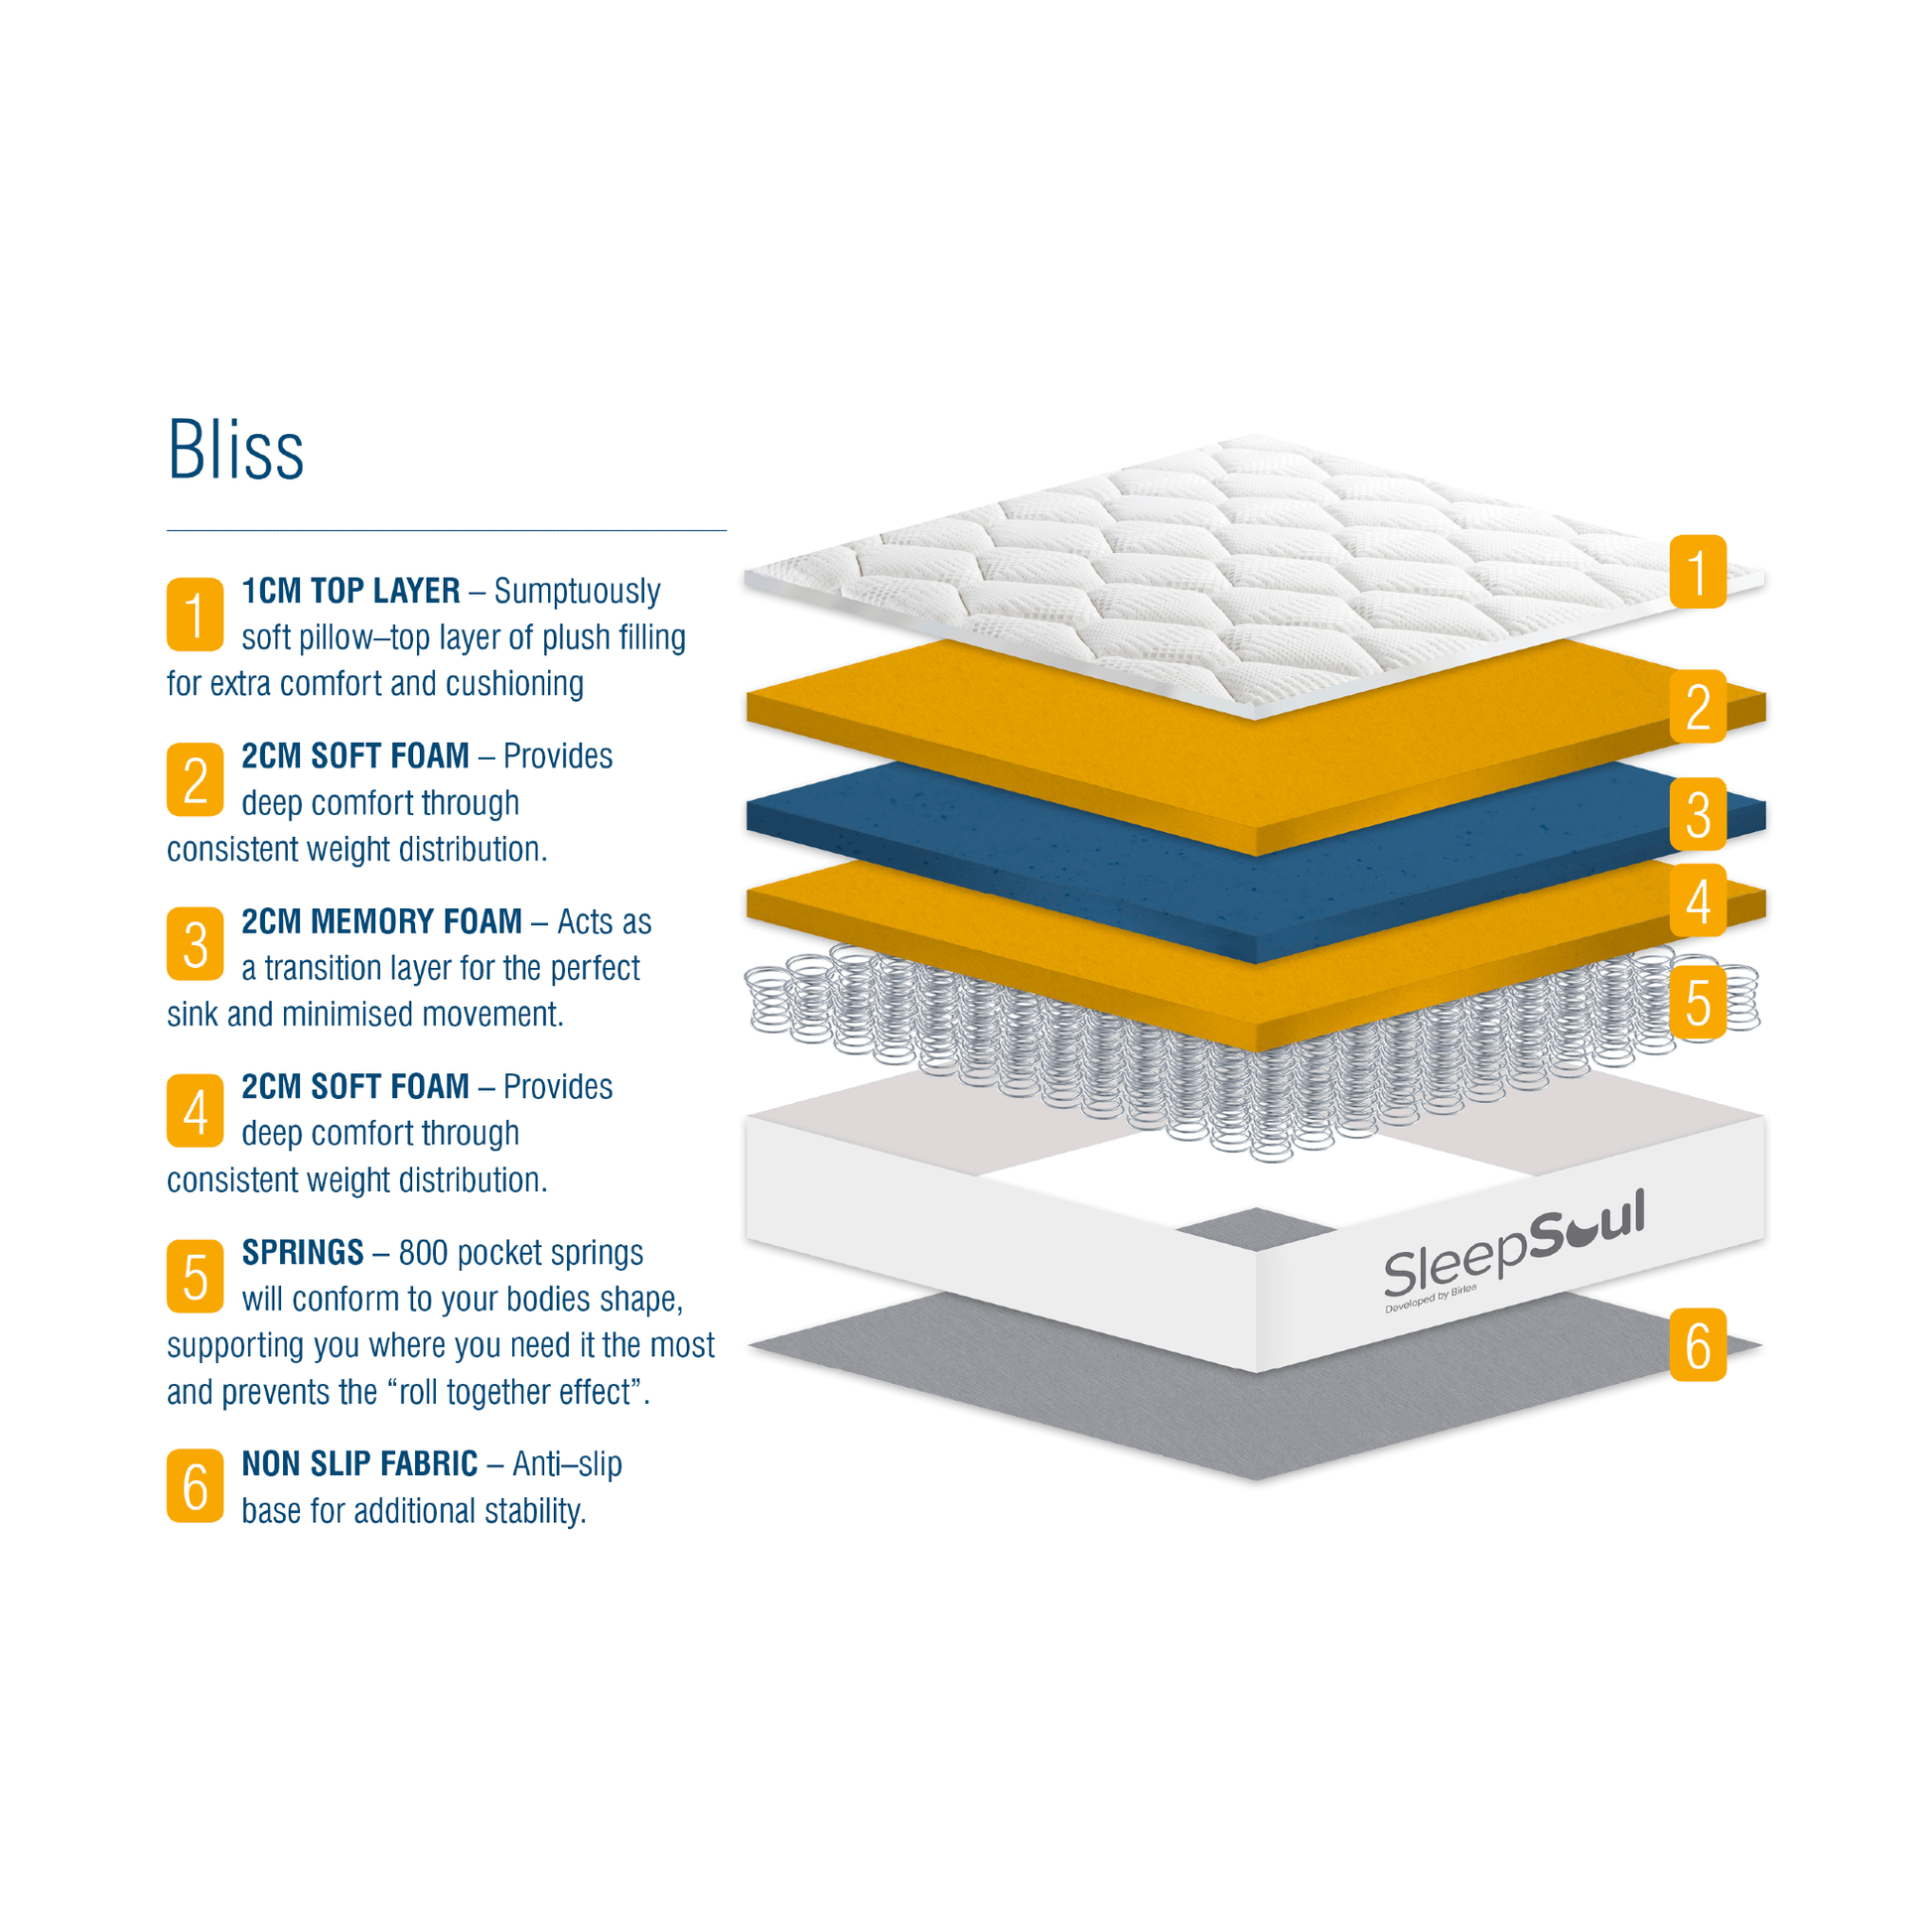 SleepSoul bliss 800 pocket spring and memory foam pillow top mattress diagram